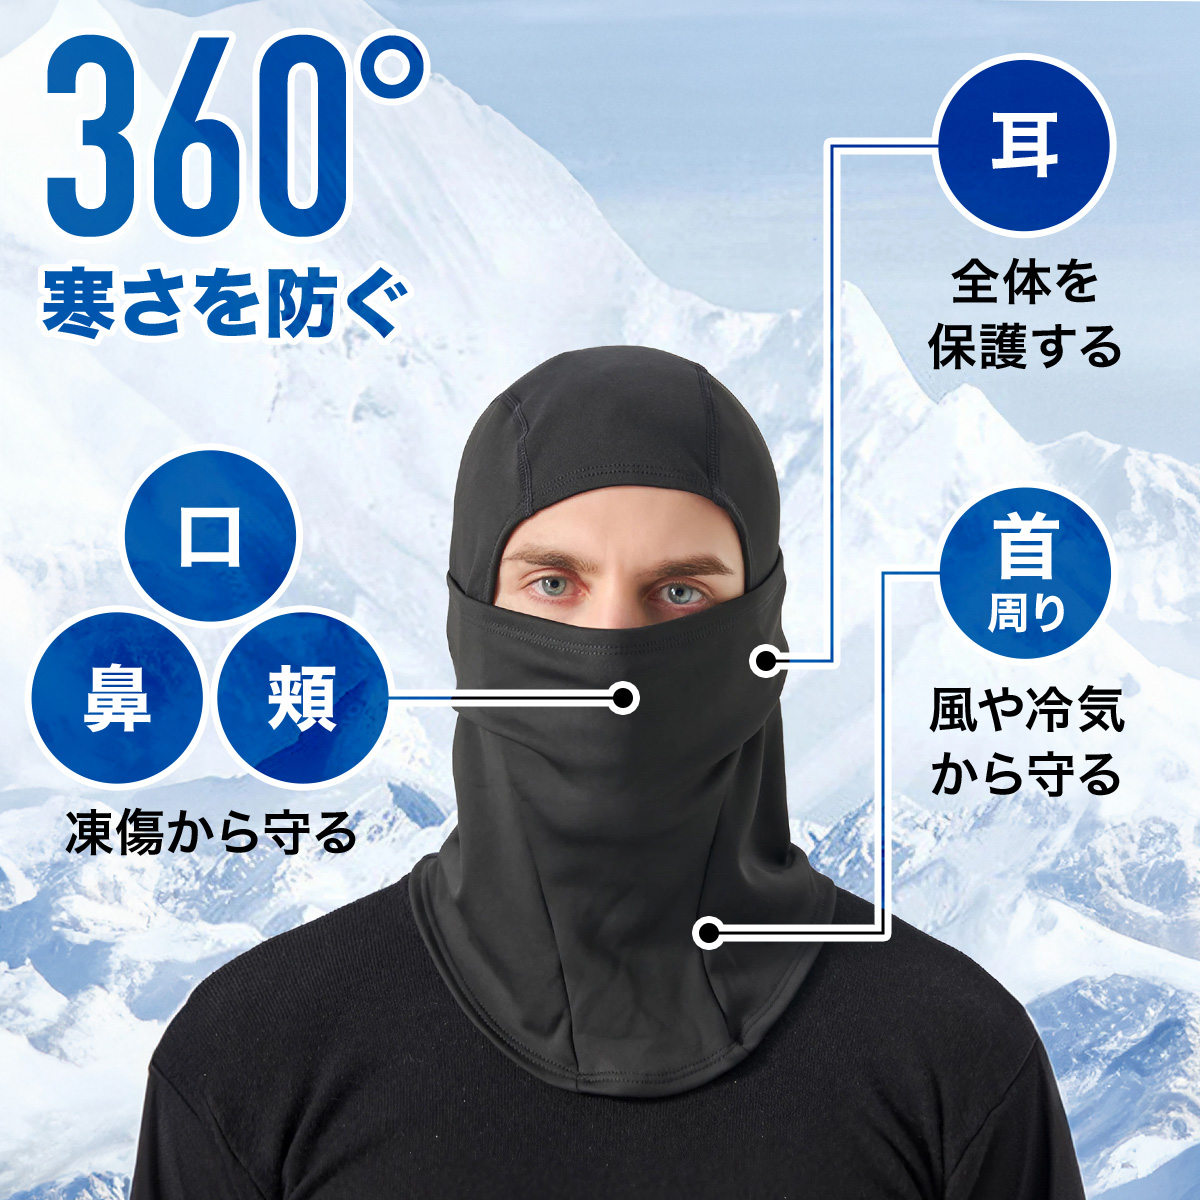  защита горла "neck warmer" мужской капот утеплитель защищающий от холода маска для лица лицо утеплитель шея gator мотоцикл лыжи сноуборд рыбалка 